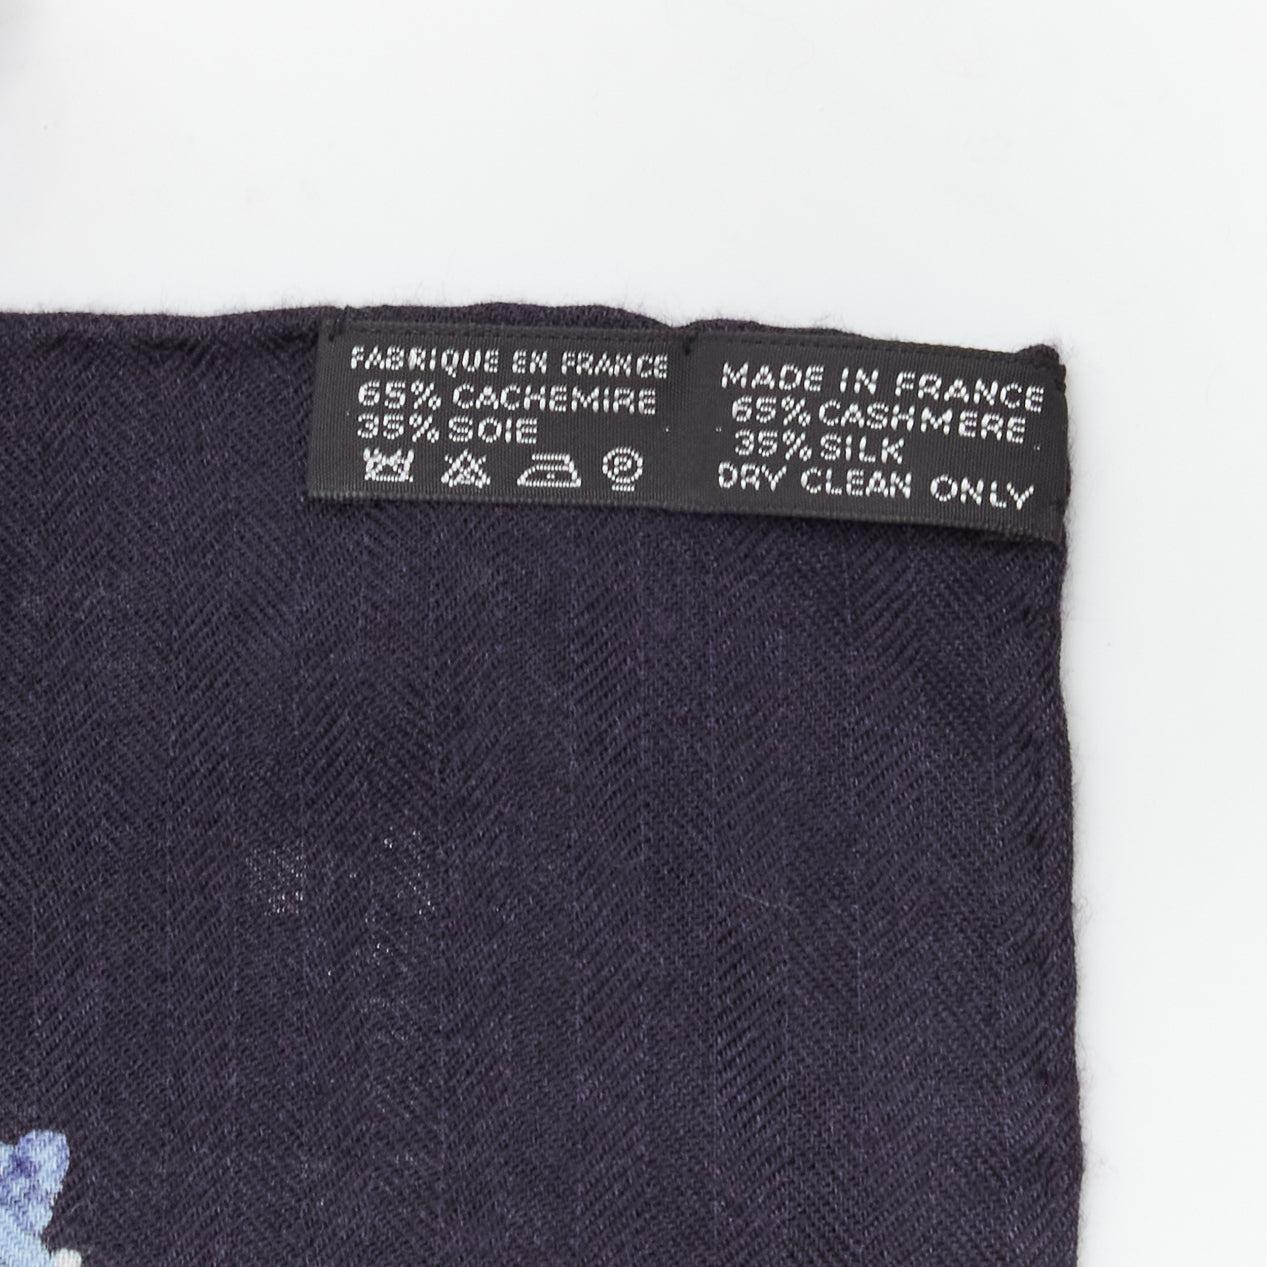 HERMES Robe du Soir navy blue chain link print cashmere silk scarf 4